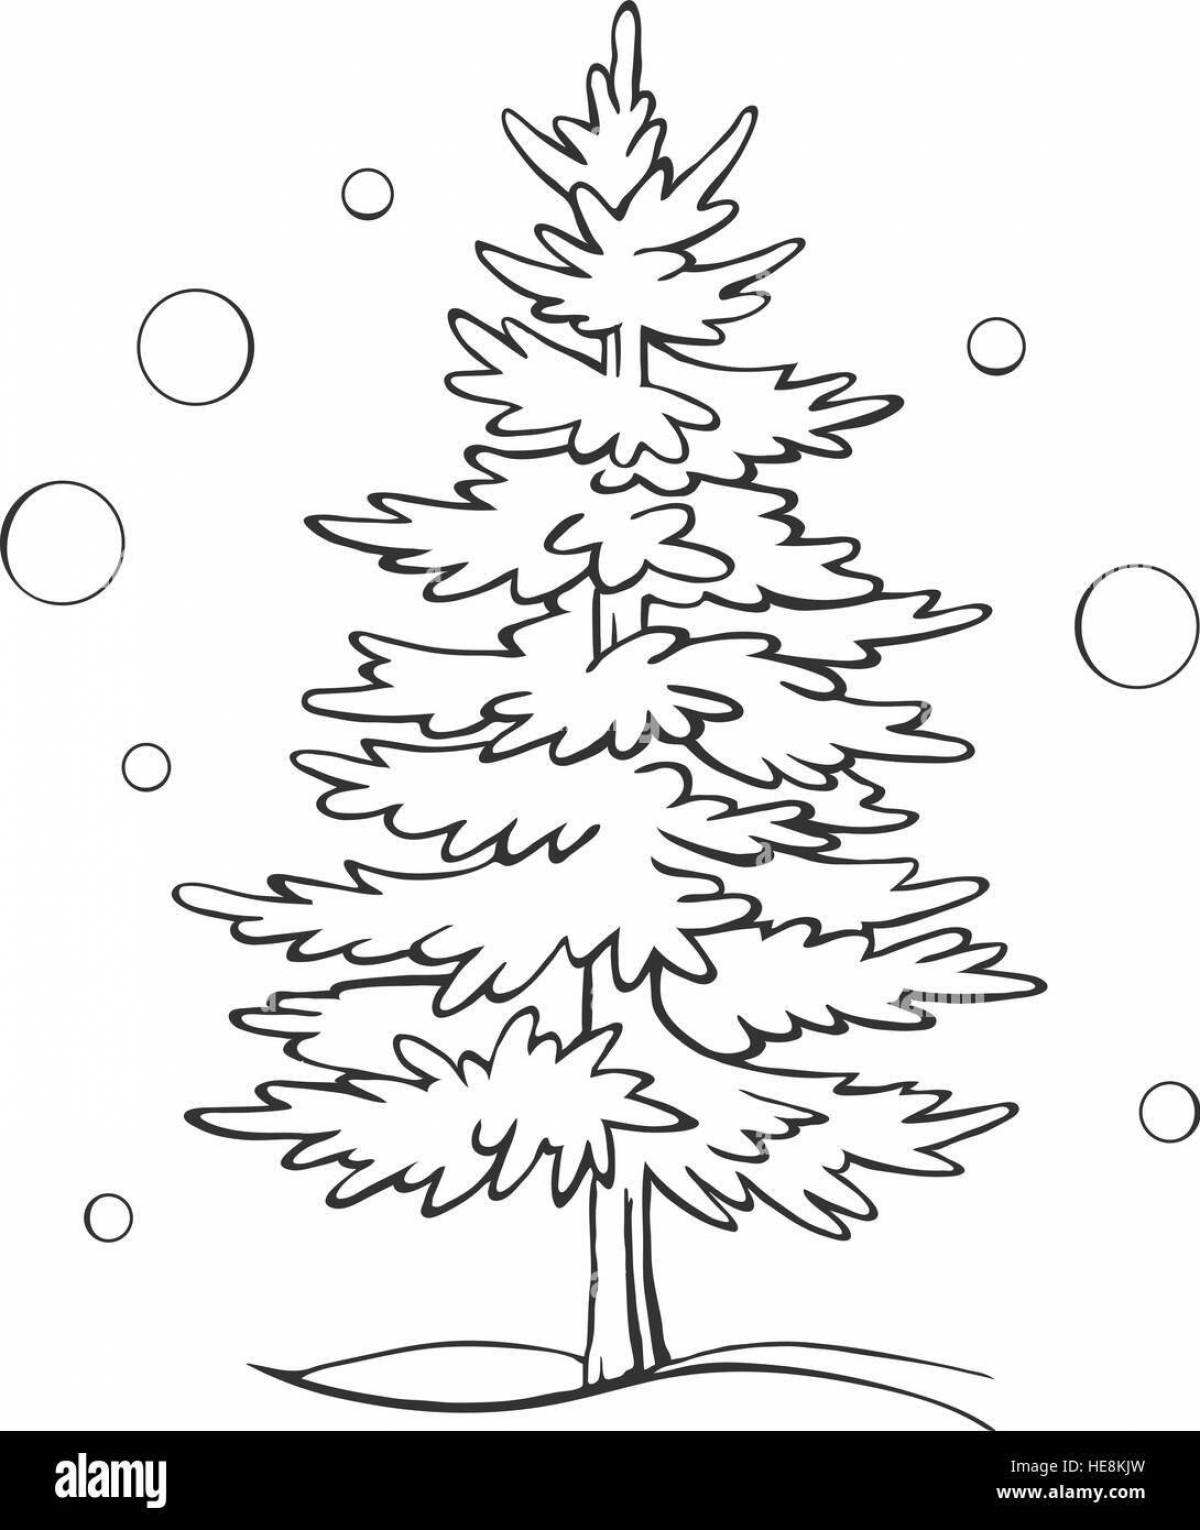 Потрясающее дерево на странице раскраски снега